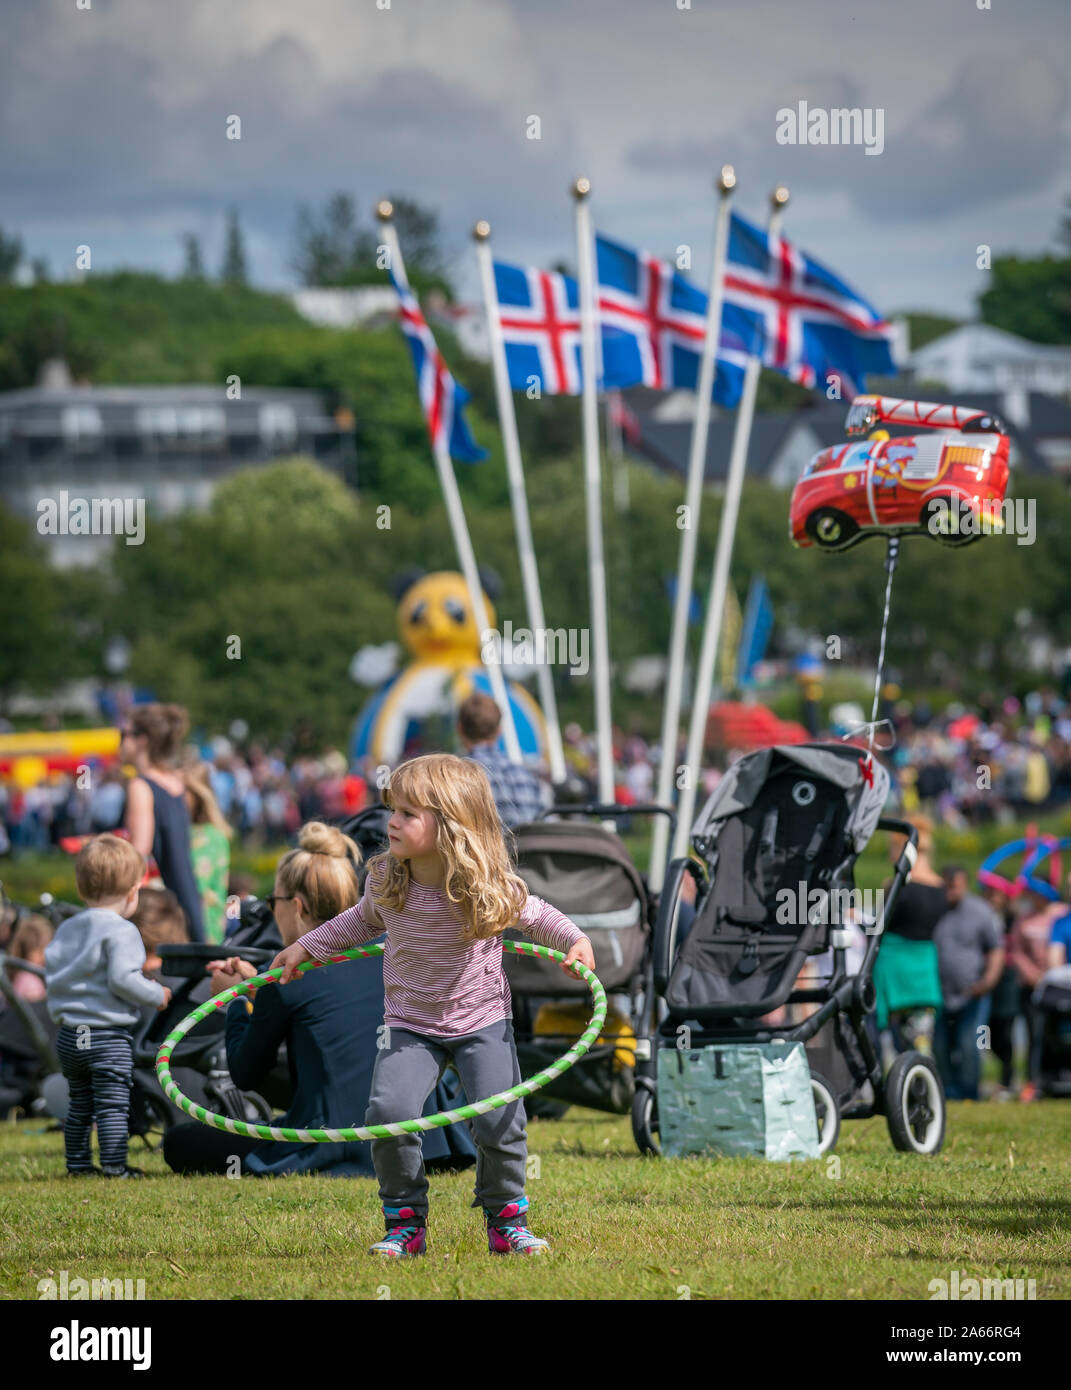 Celebrando Giugno 17th, Islanda giorno dell indipendenza, Reykjavik, Islanda Foto Stock